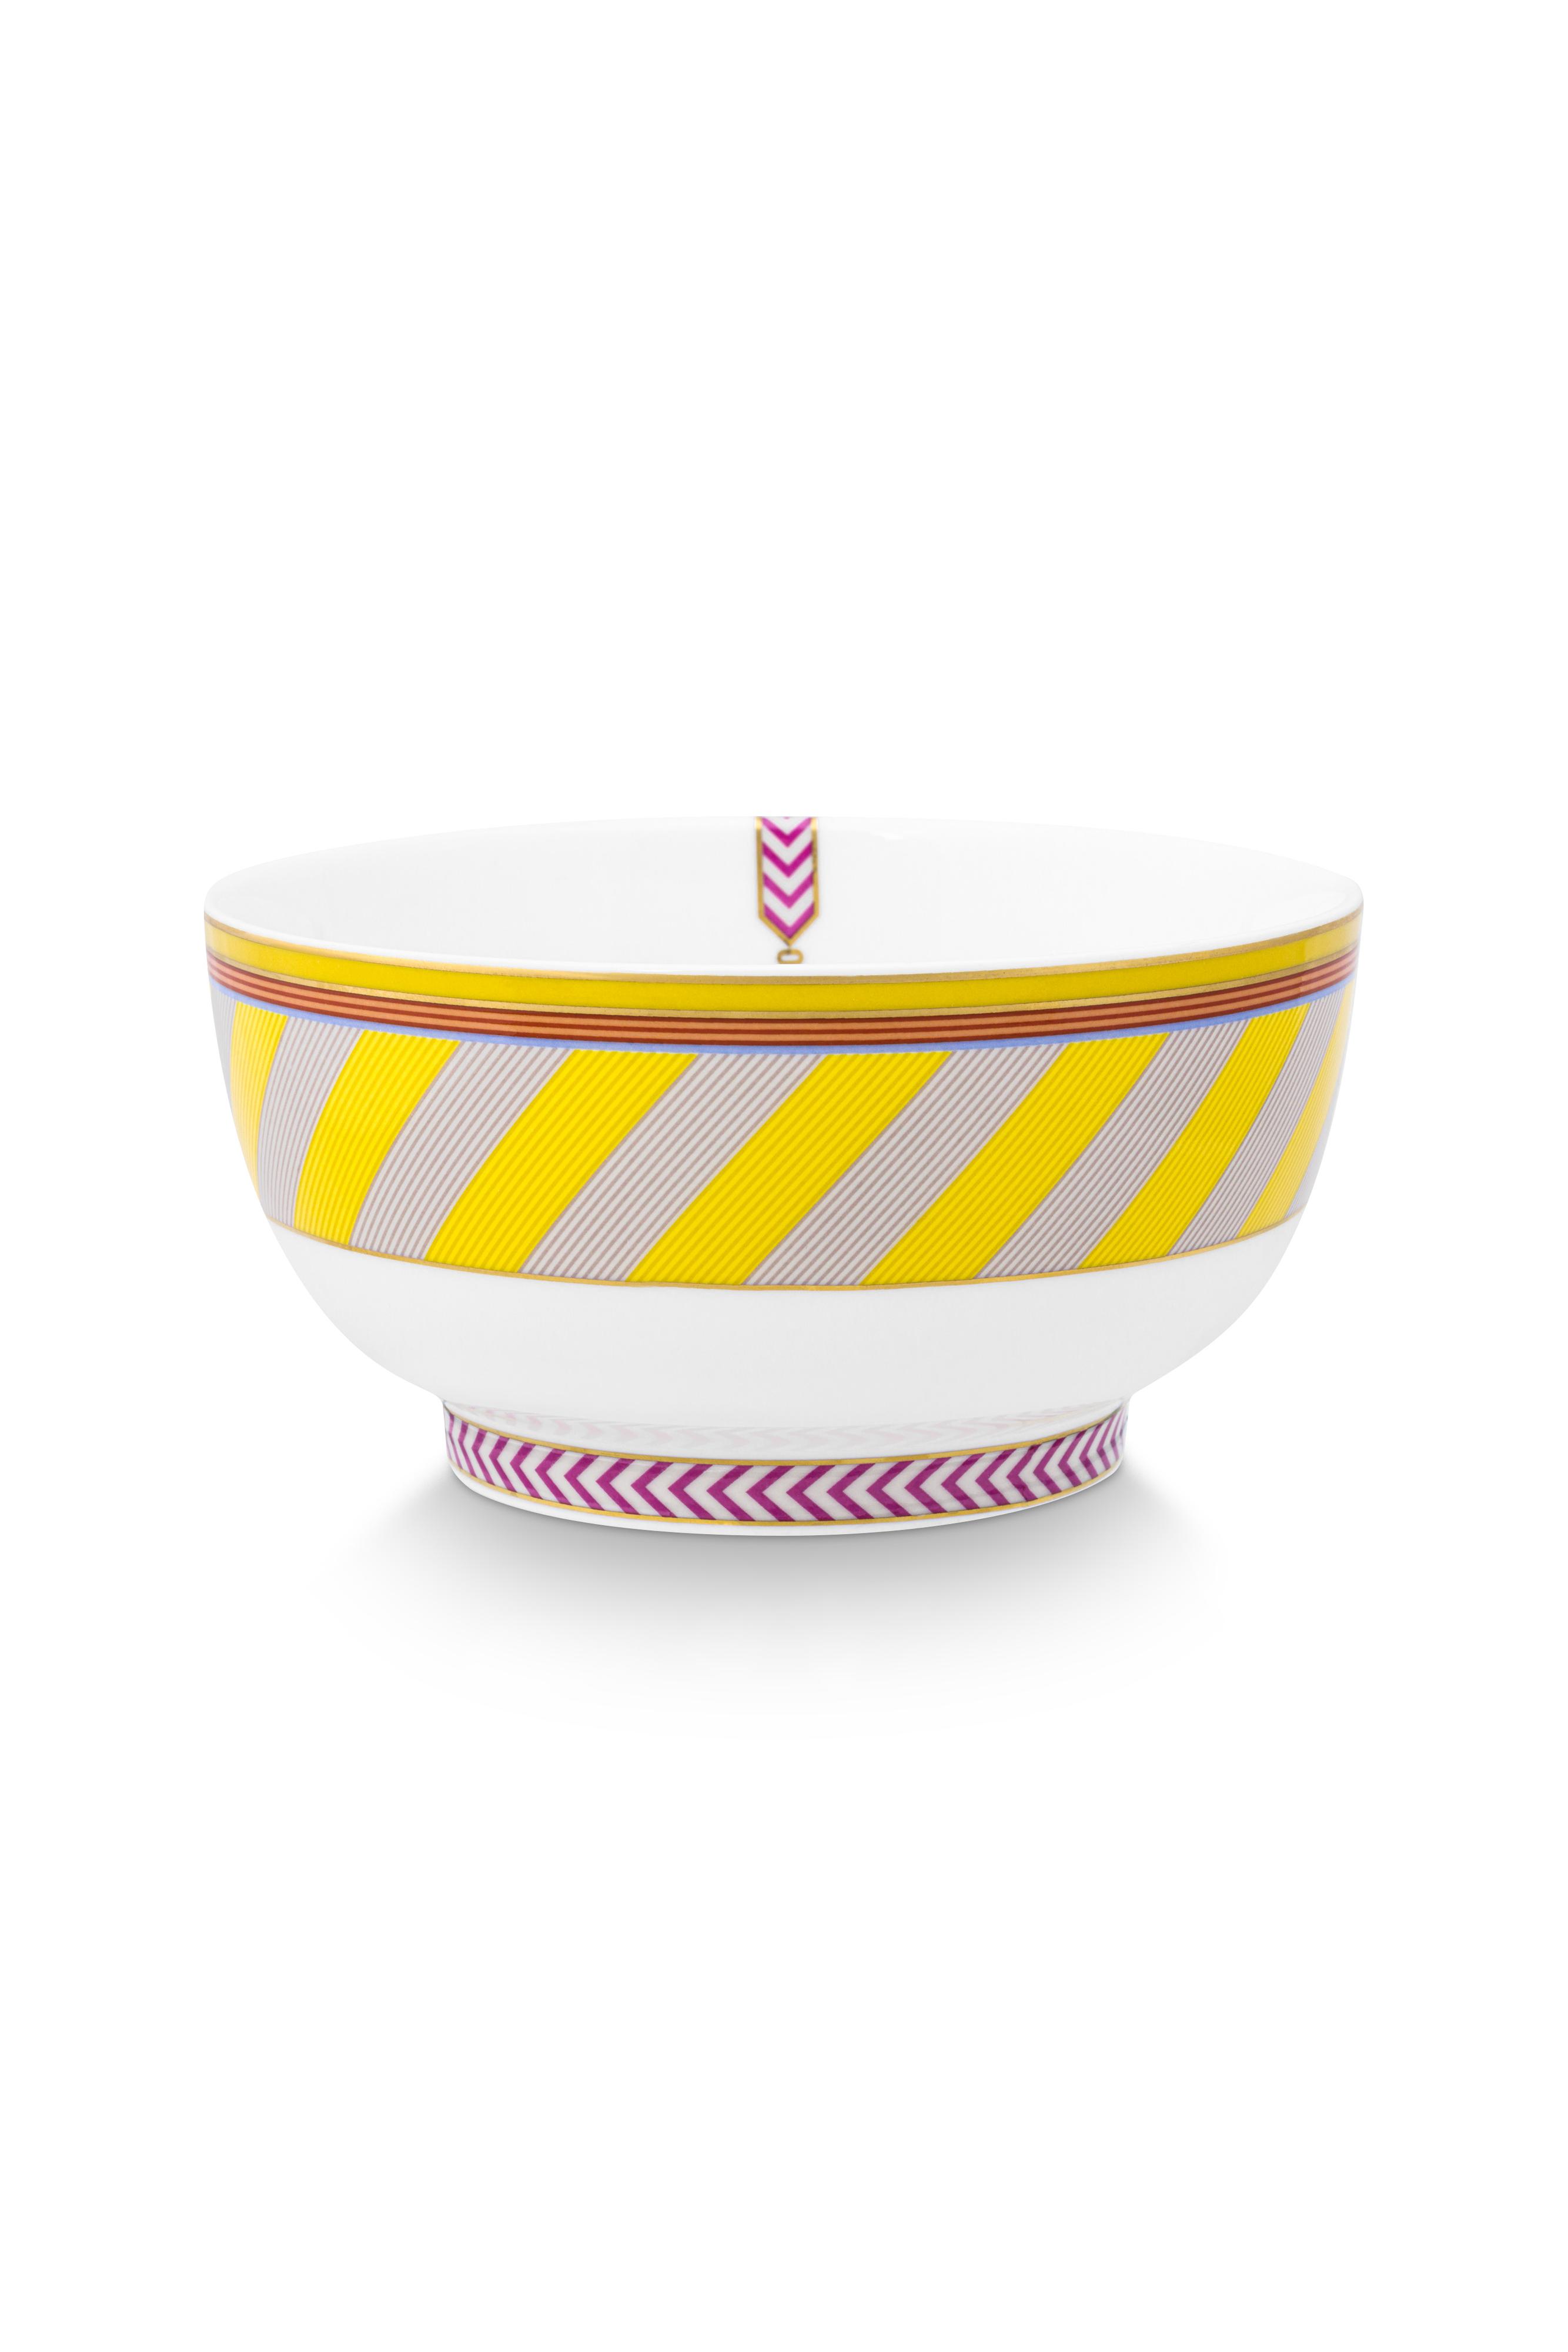 Bowl Pip Chique Stripes Yellow 15.5cm Gift